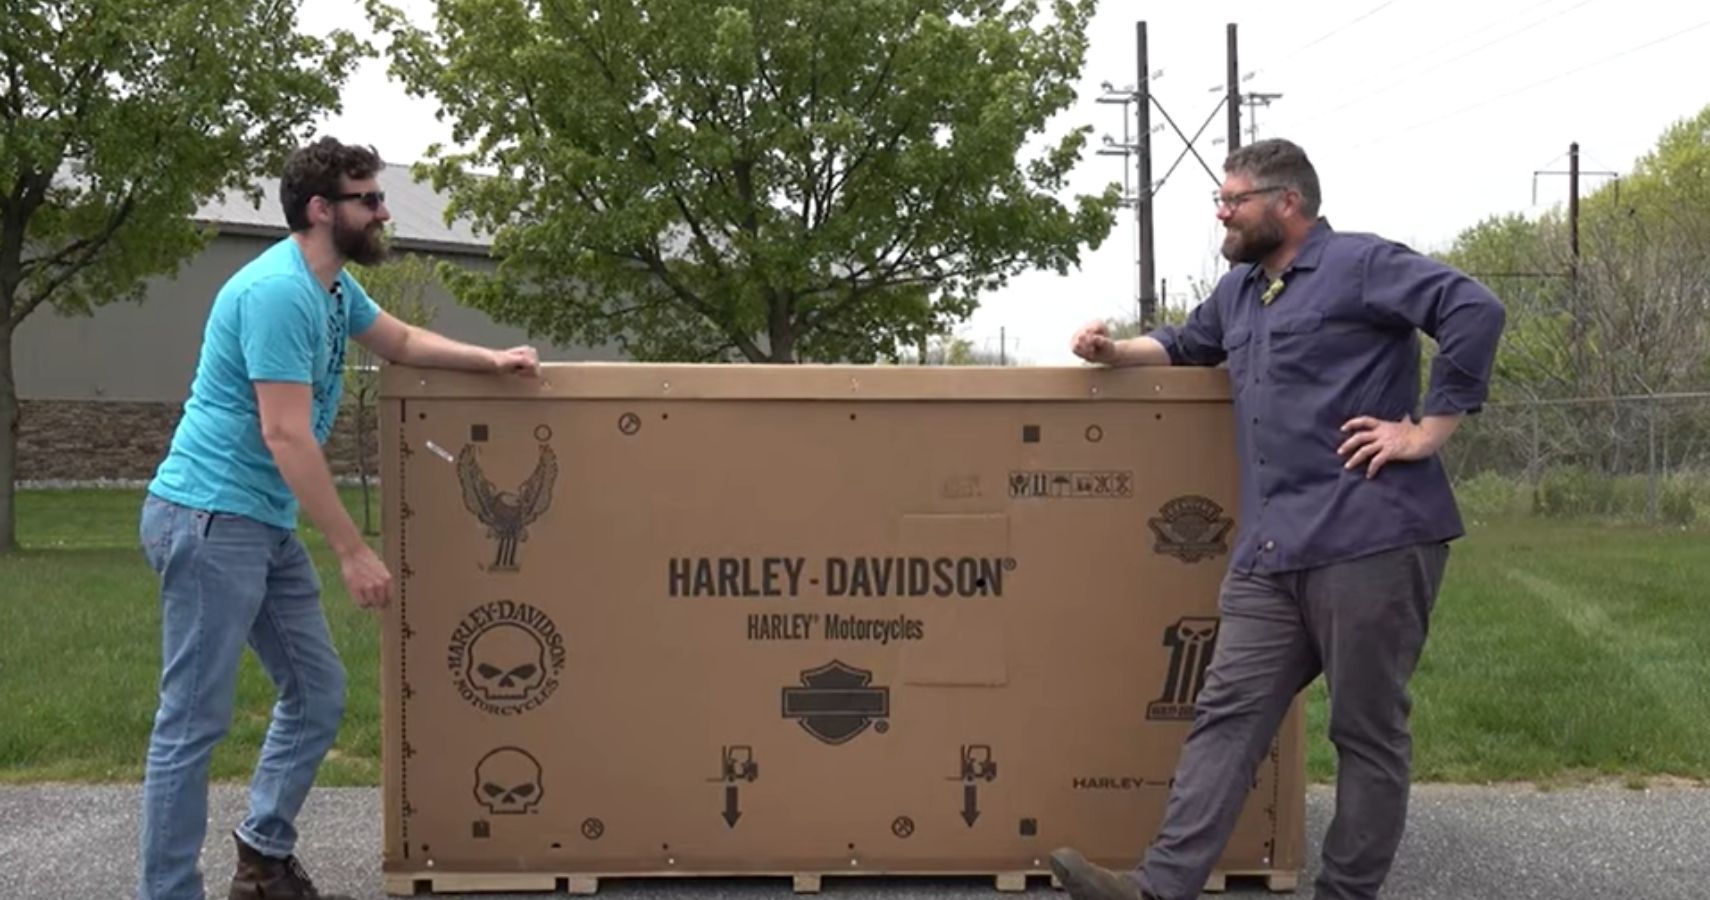 Large Harley-Davidson Box with team at sides